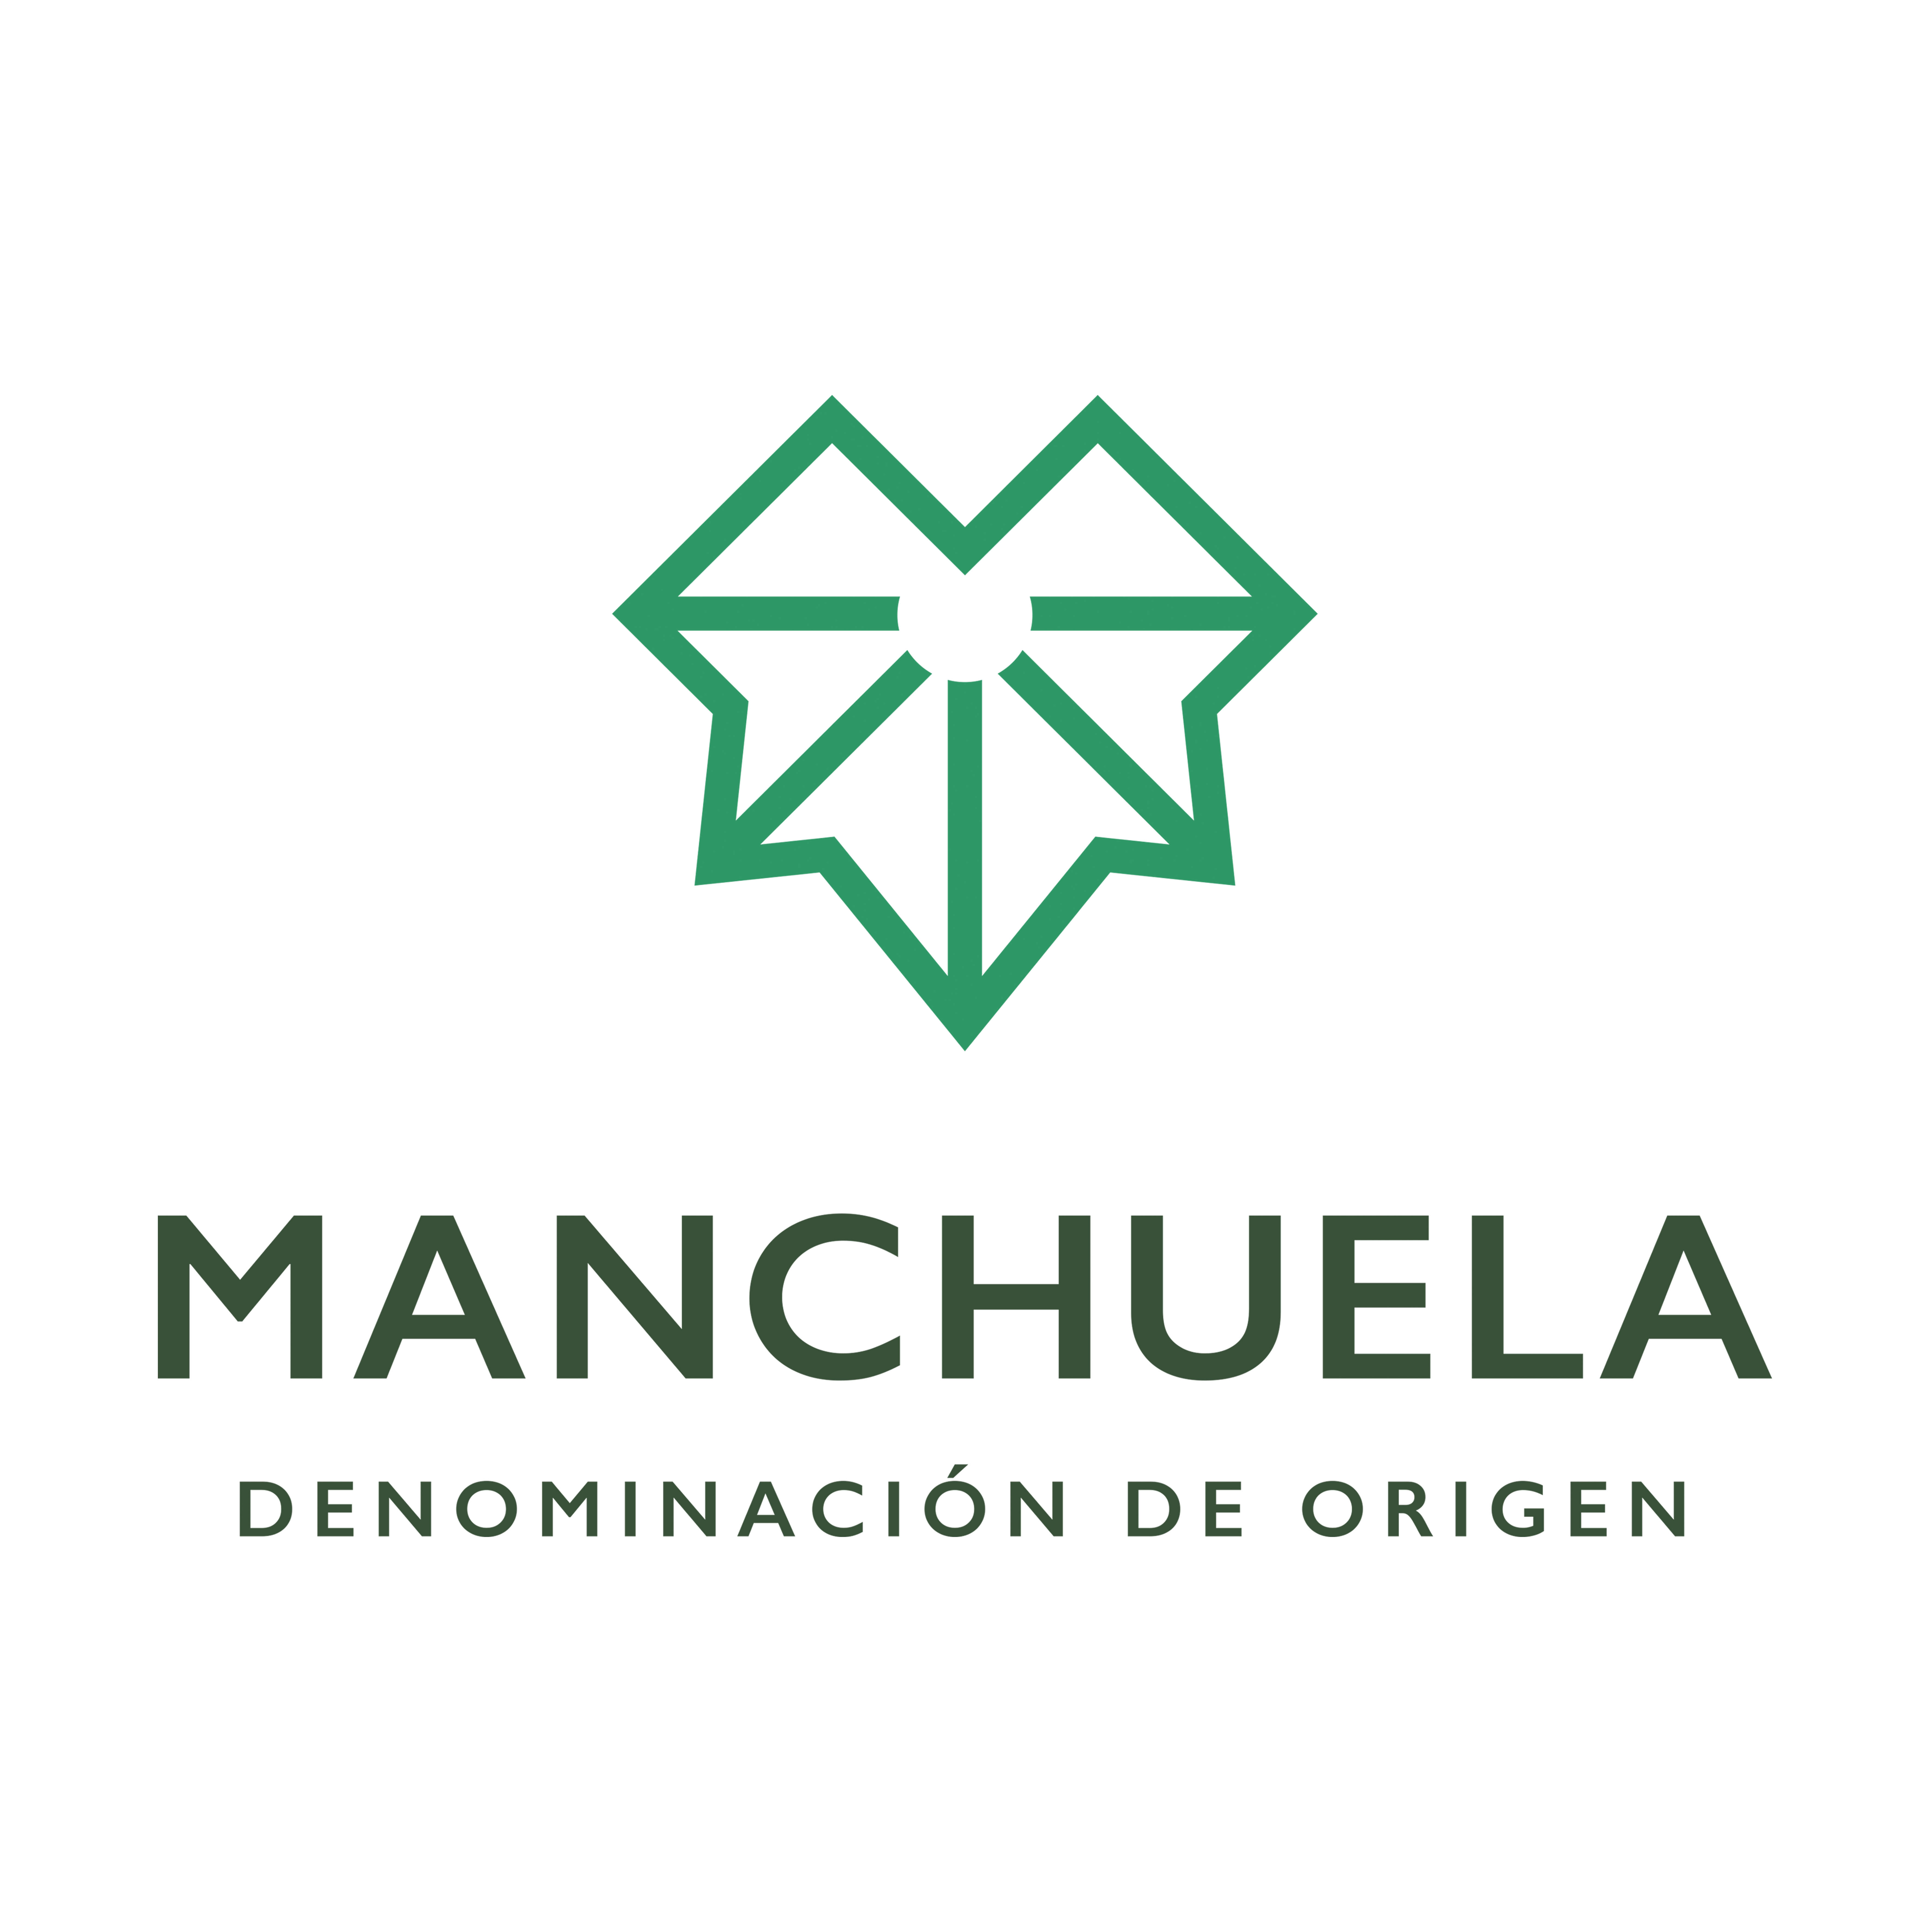 Logo of the MANCHUELA